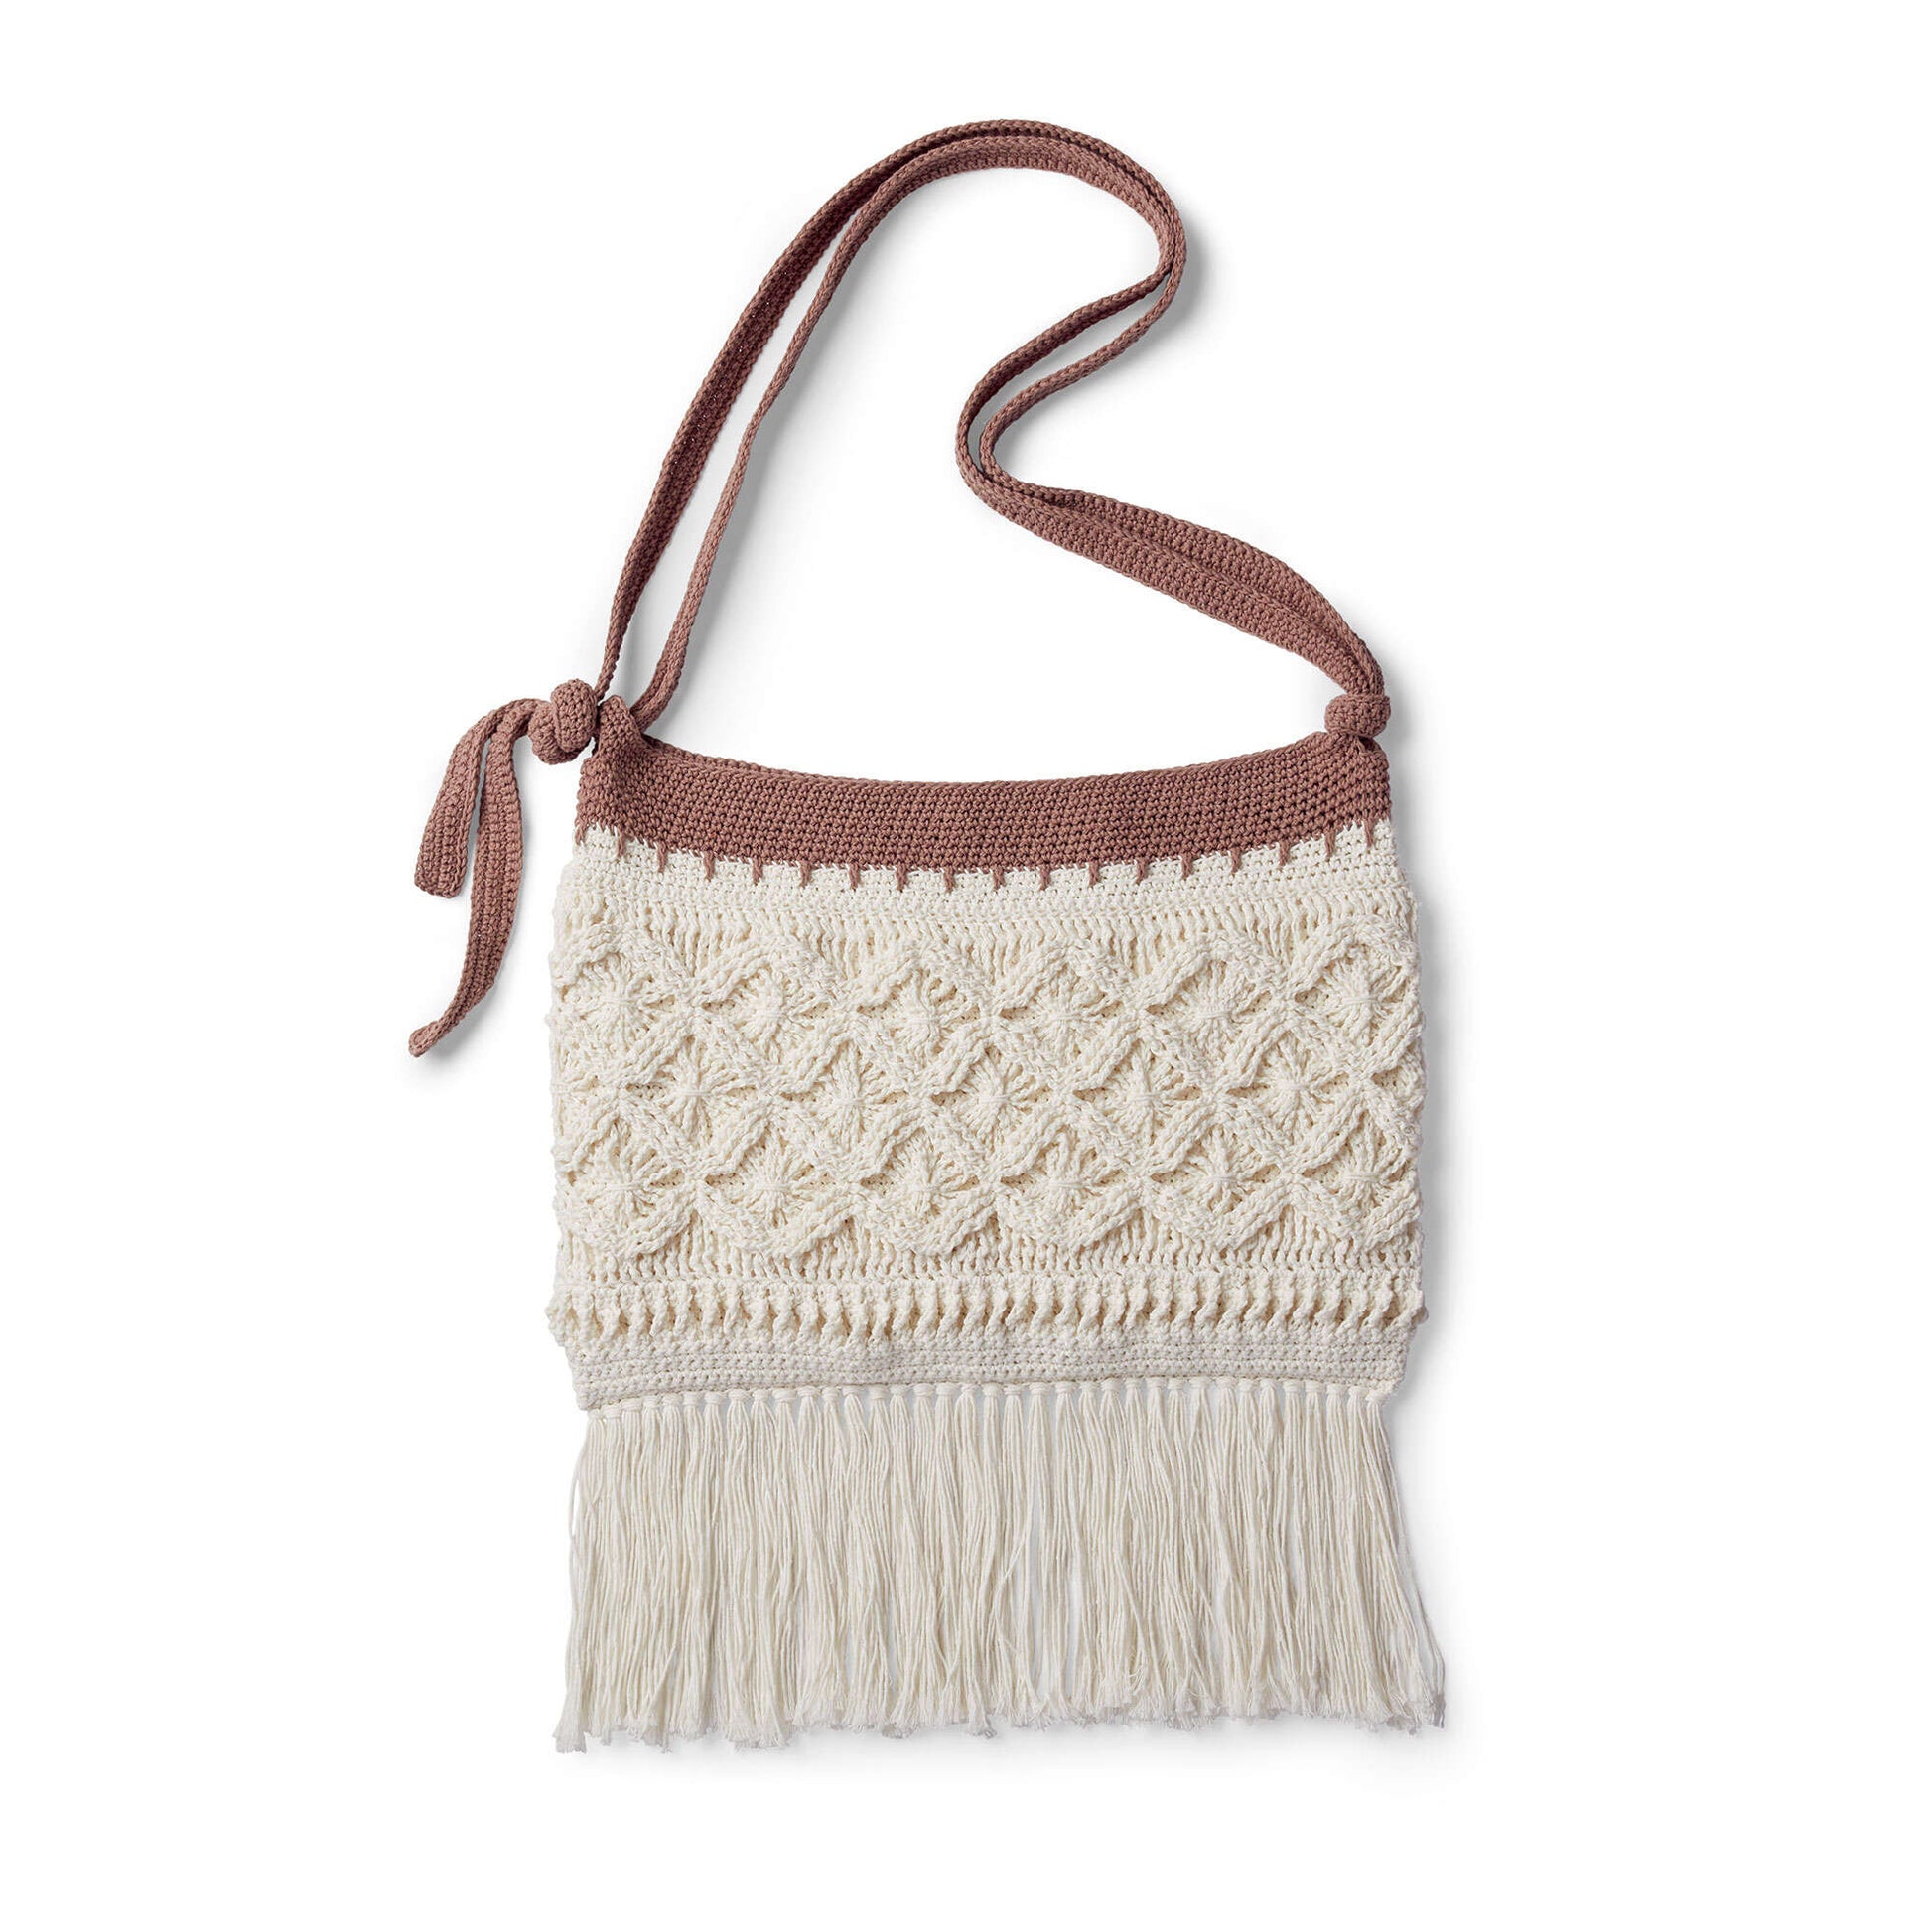 Free Patons Mock-Rame Crochet Bag Pattern